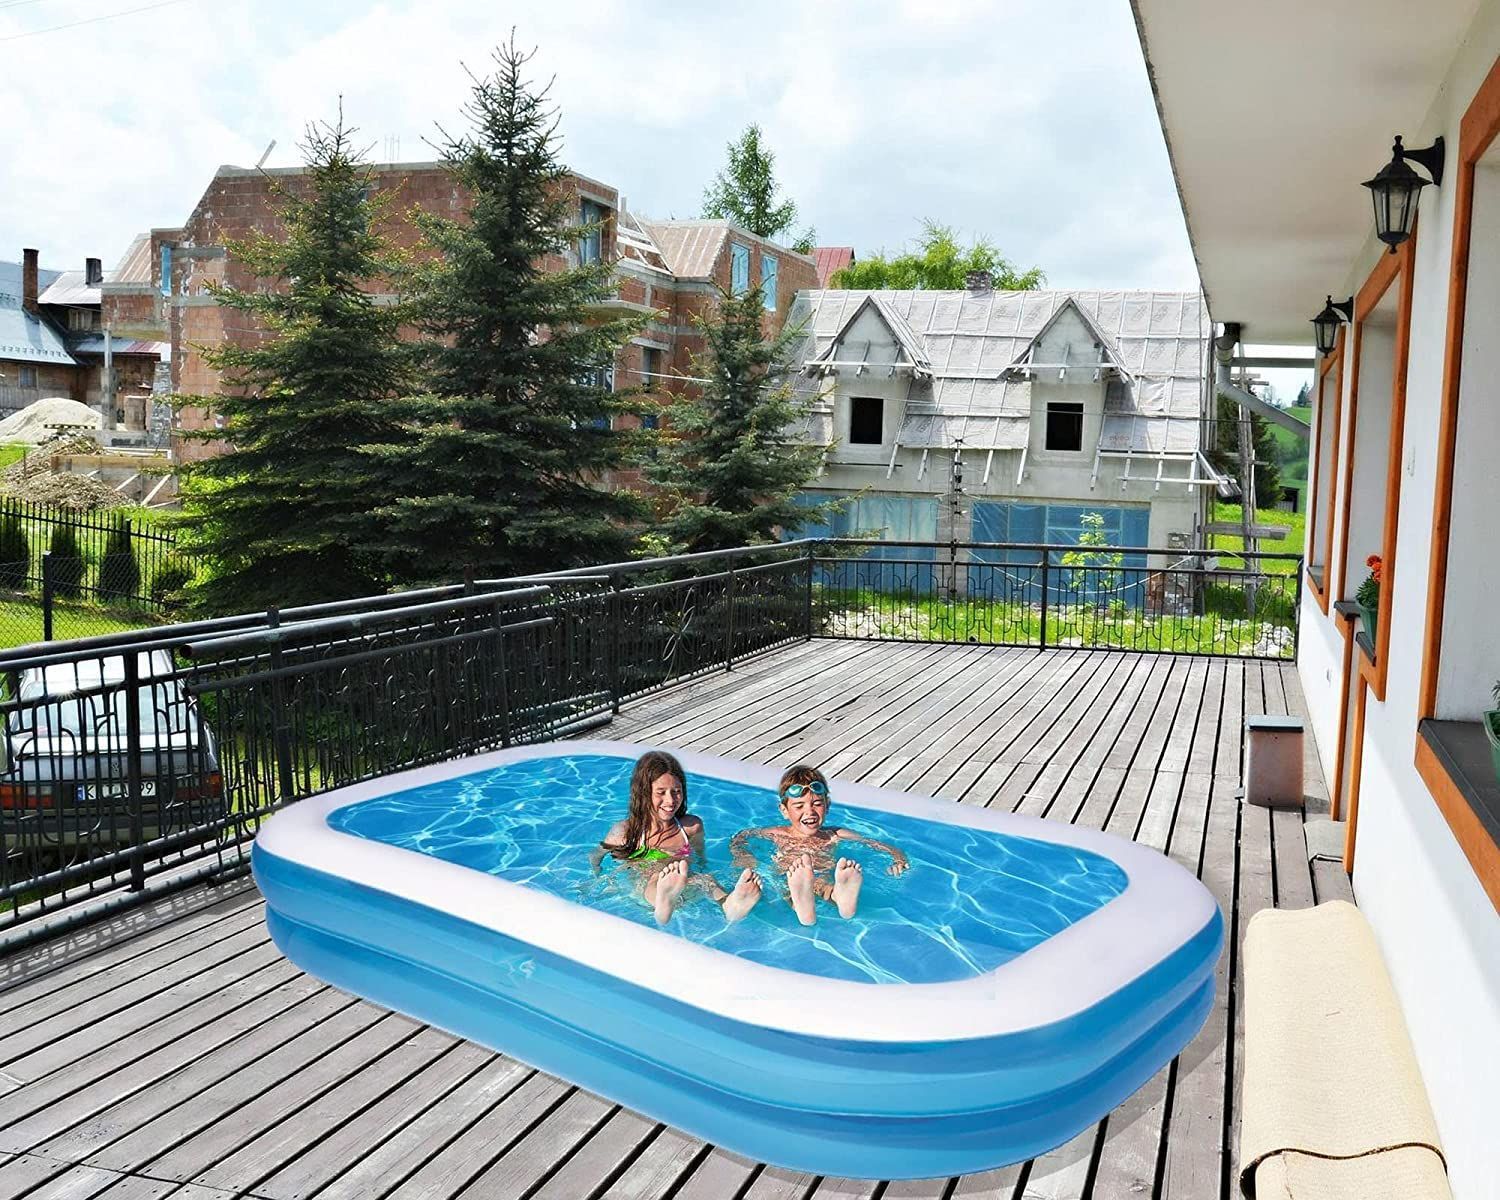 ❤️ボールプール 底クッション大型プール家庭用プール子供 暑さ対策